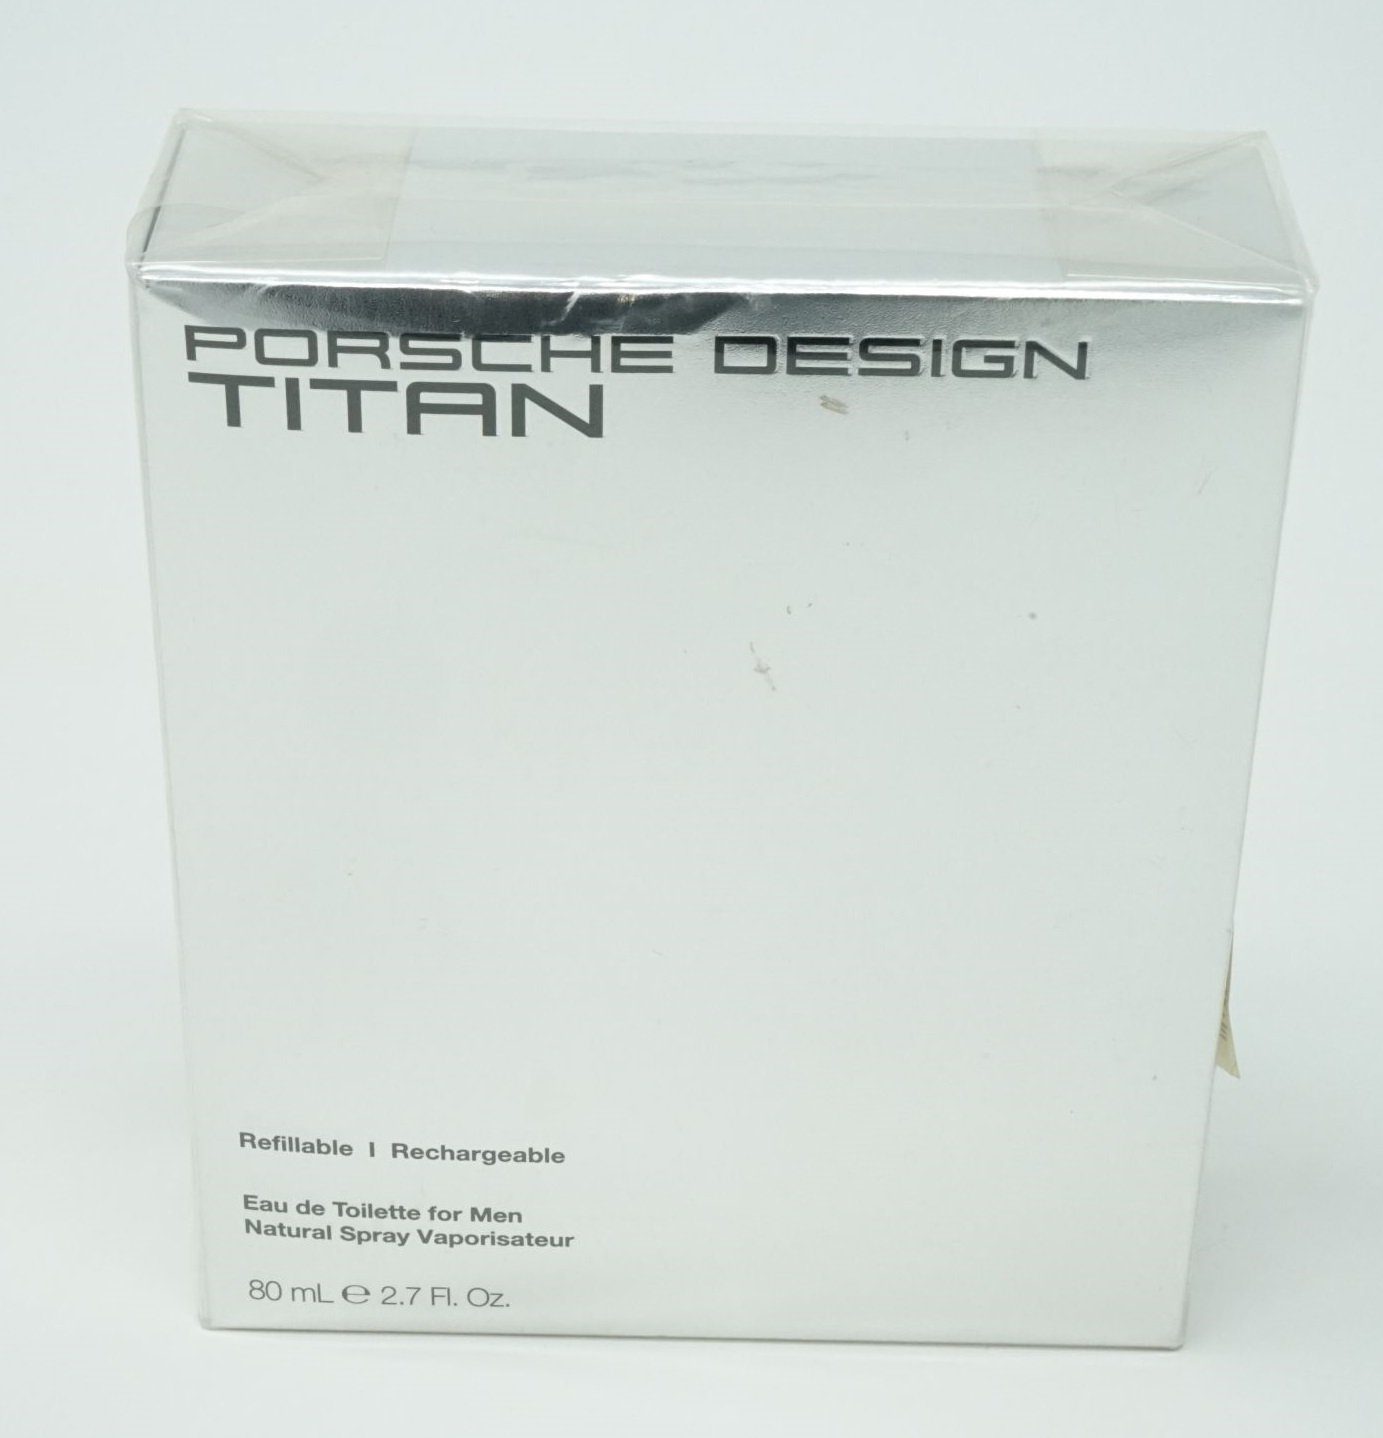 80 Design Toilette Eau de Porsche For Eau de ml Titan Spray Men Porsche Toilette